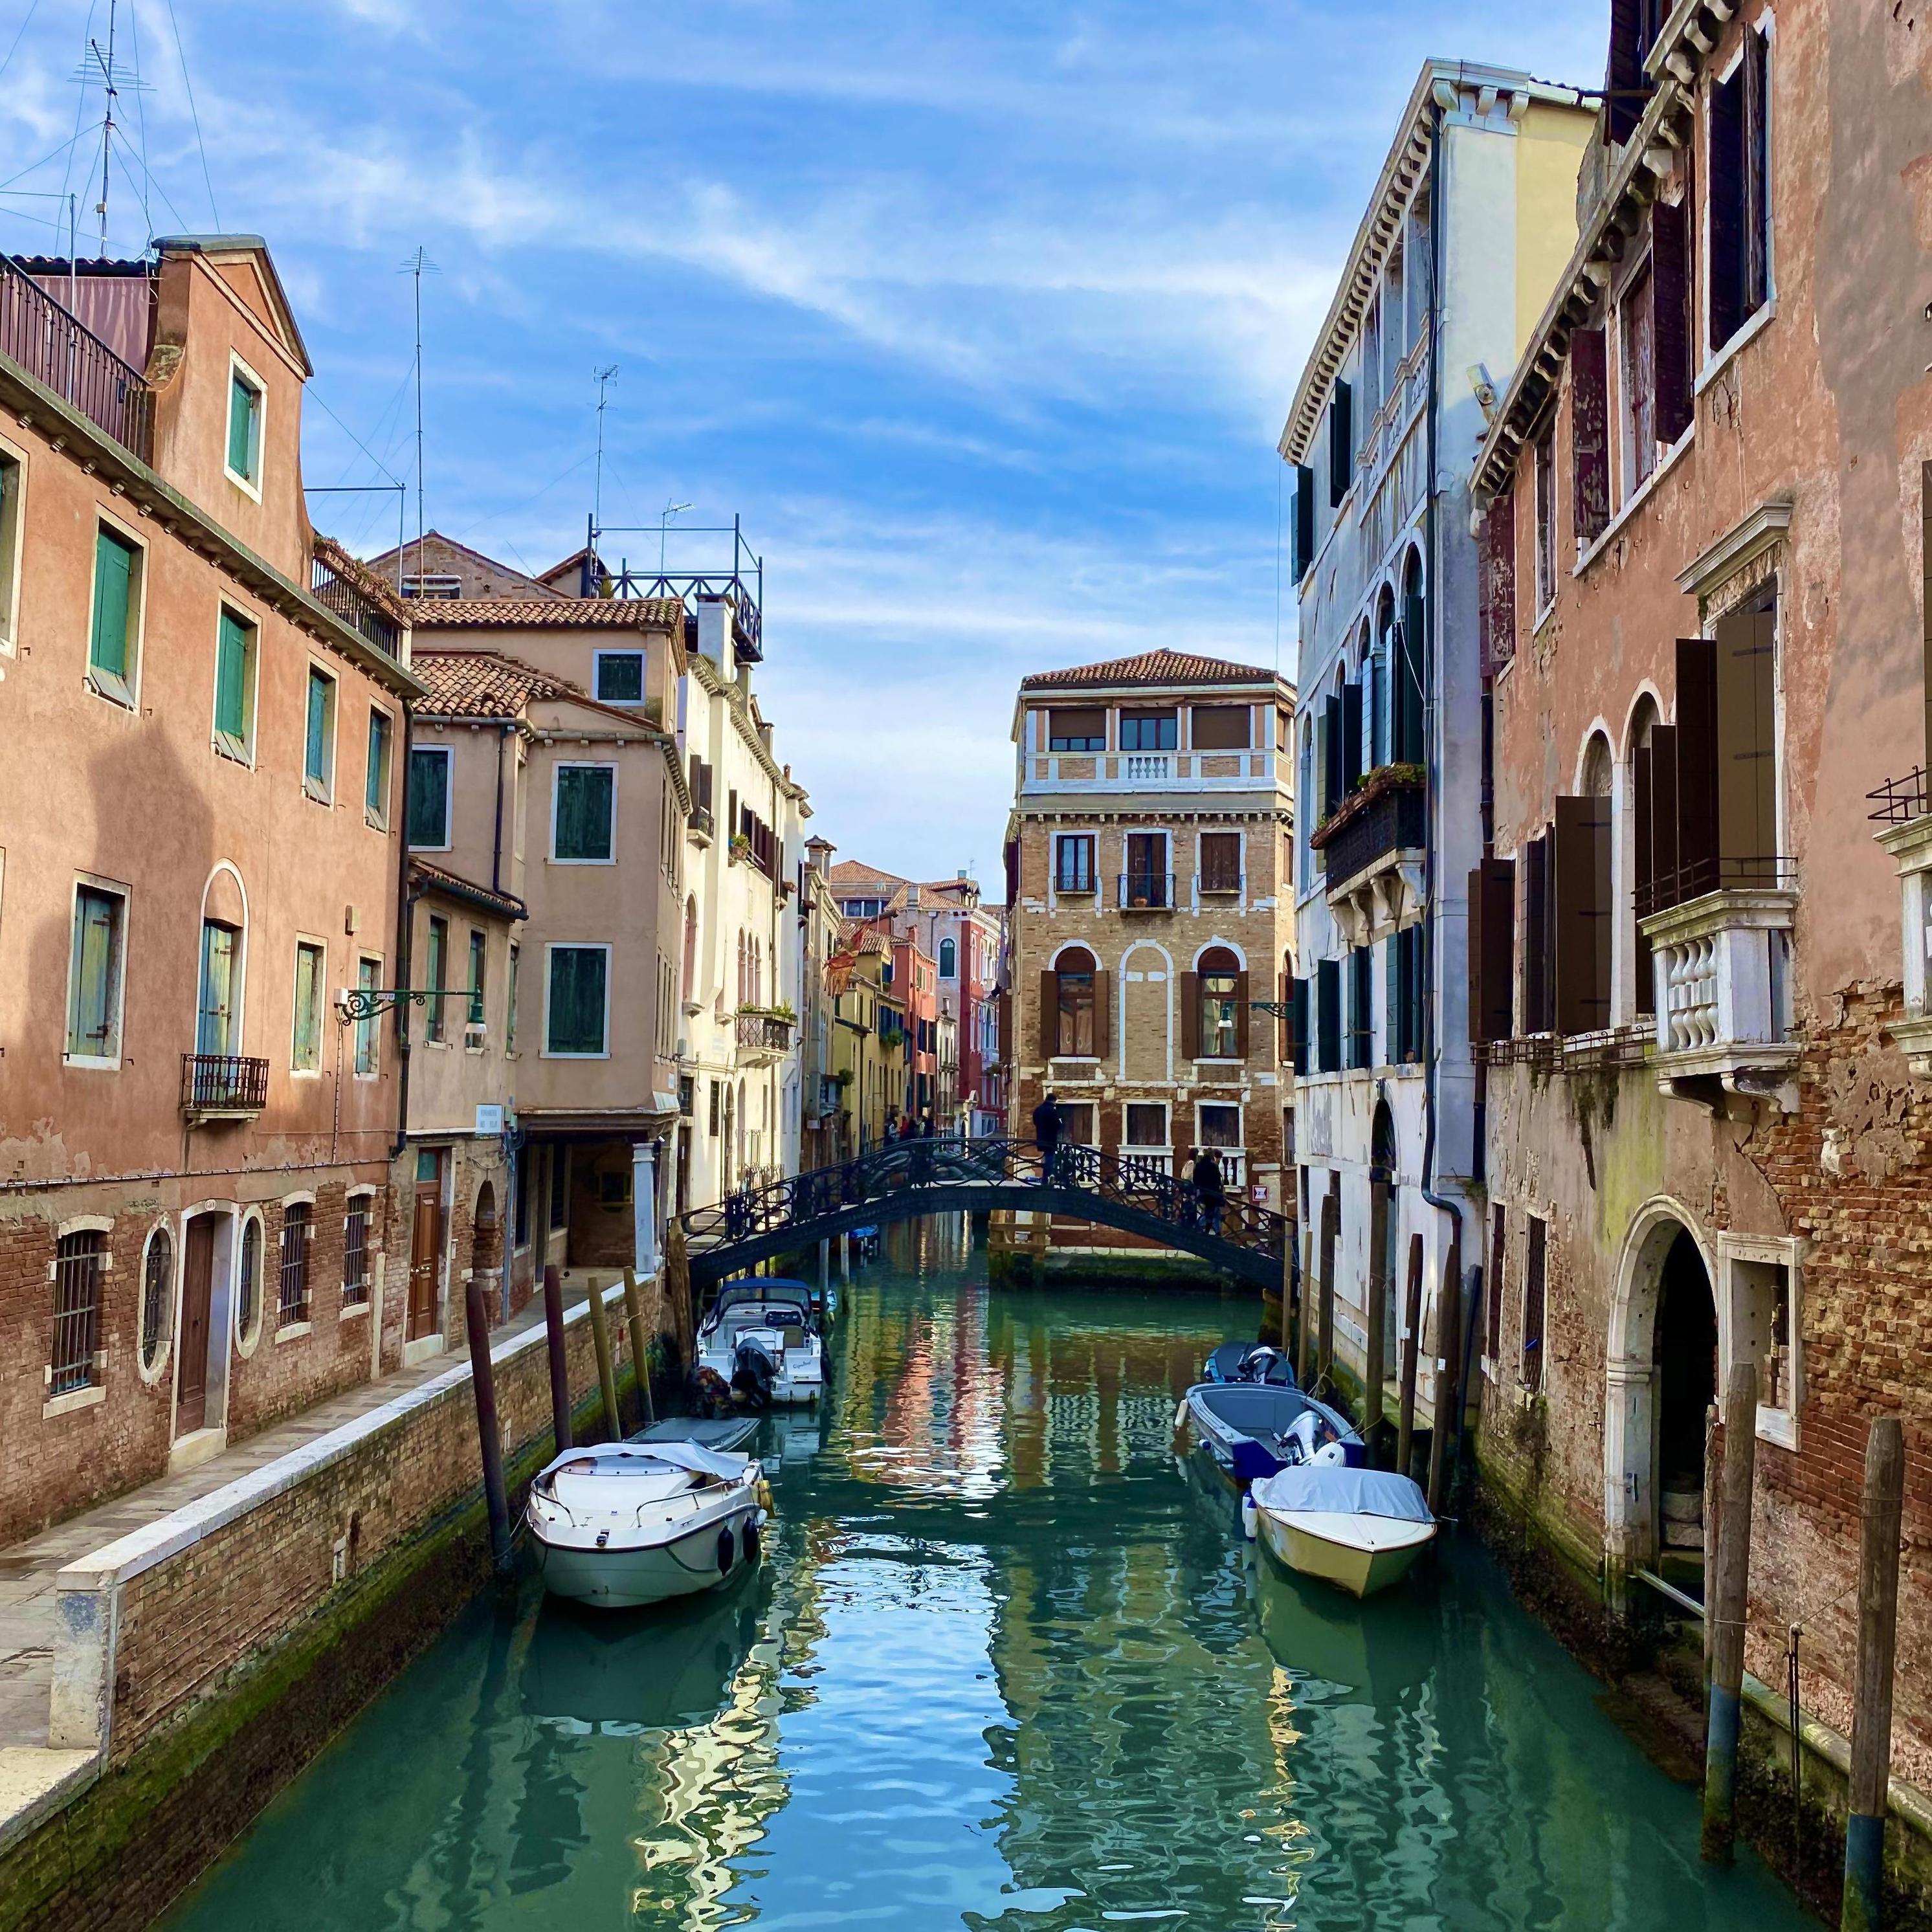 Venice Canals
2020